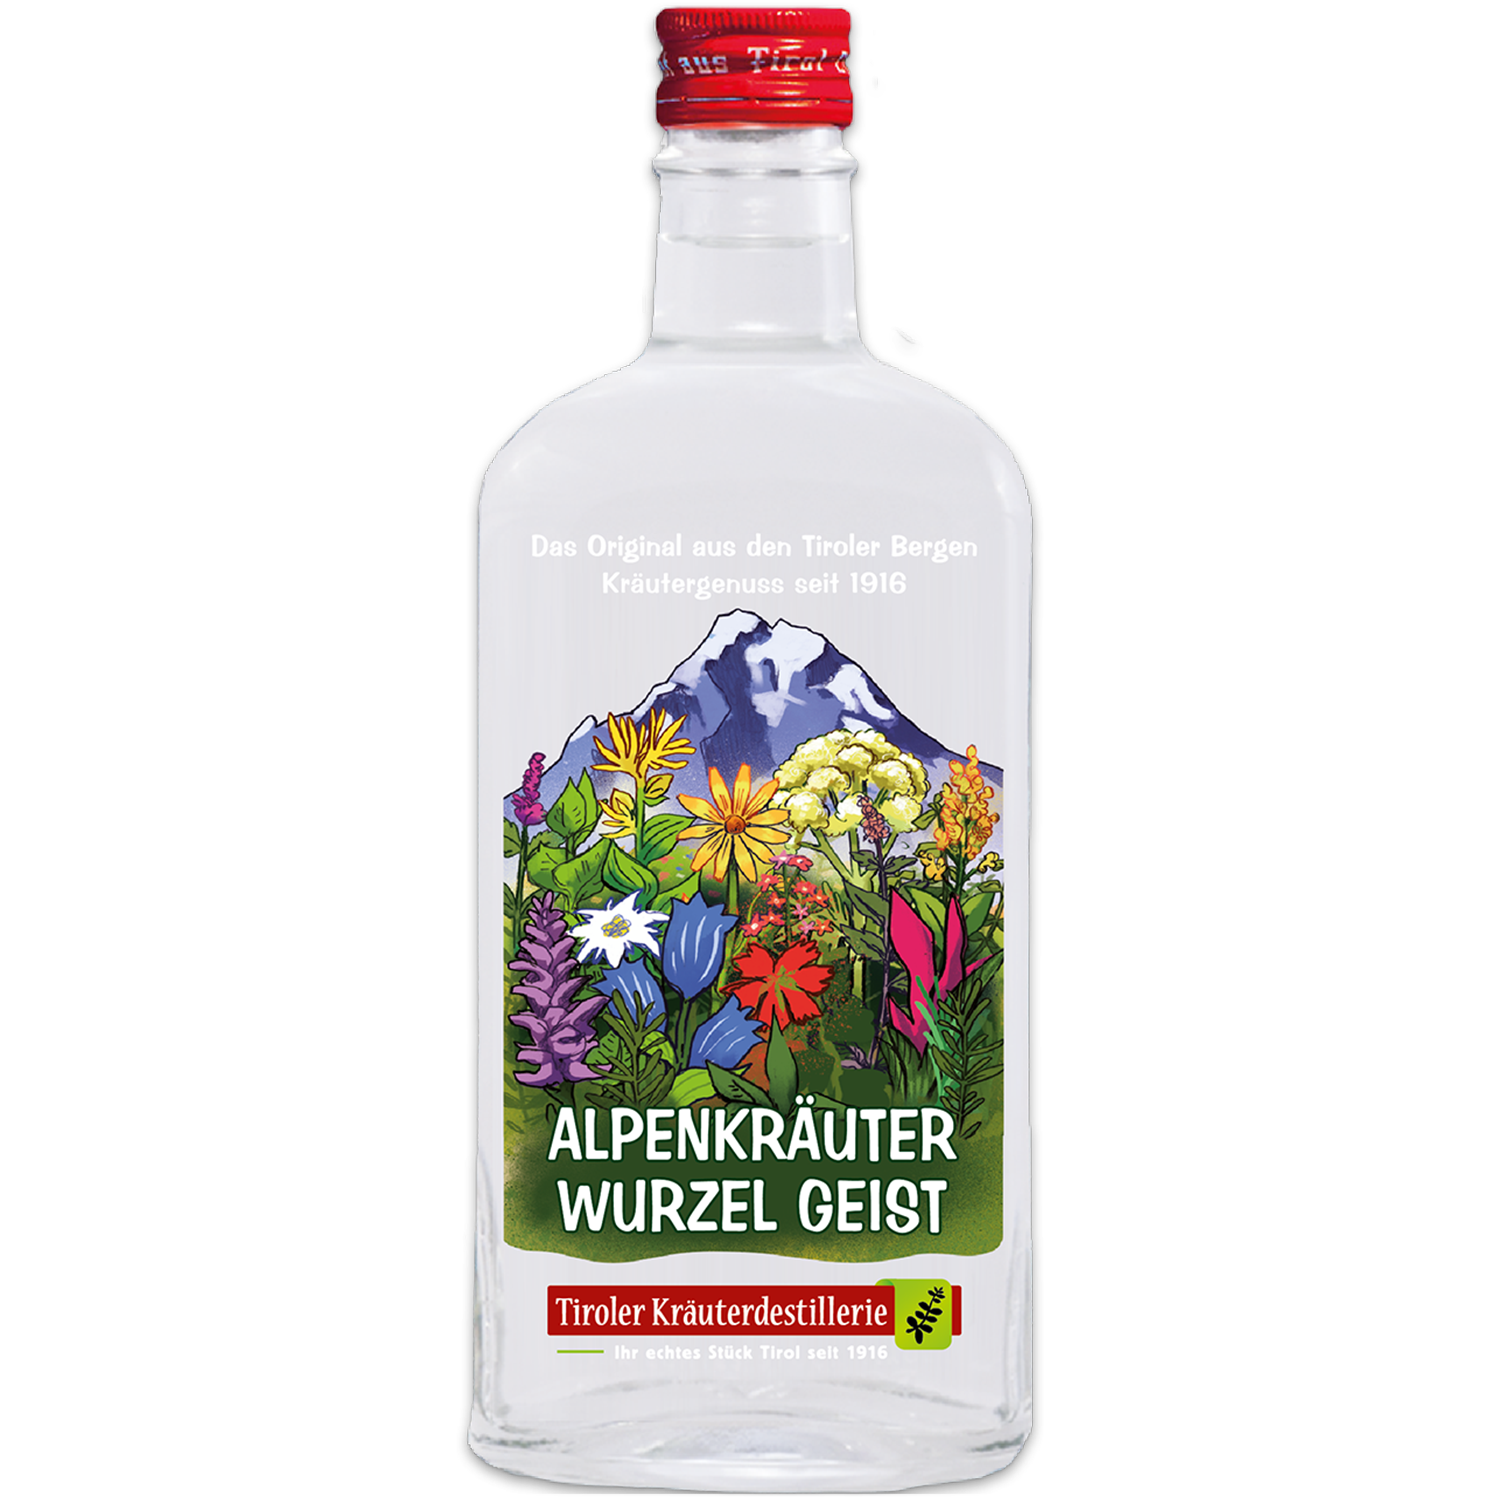 Herbal spirit from the Tyrolean Herbal Distillery in a noble bottle